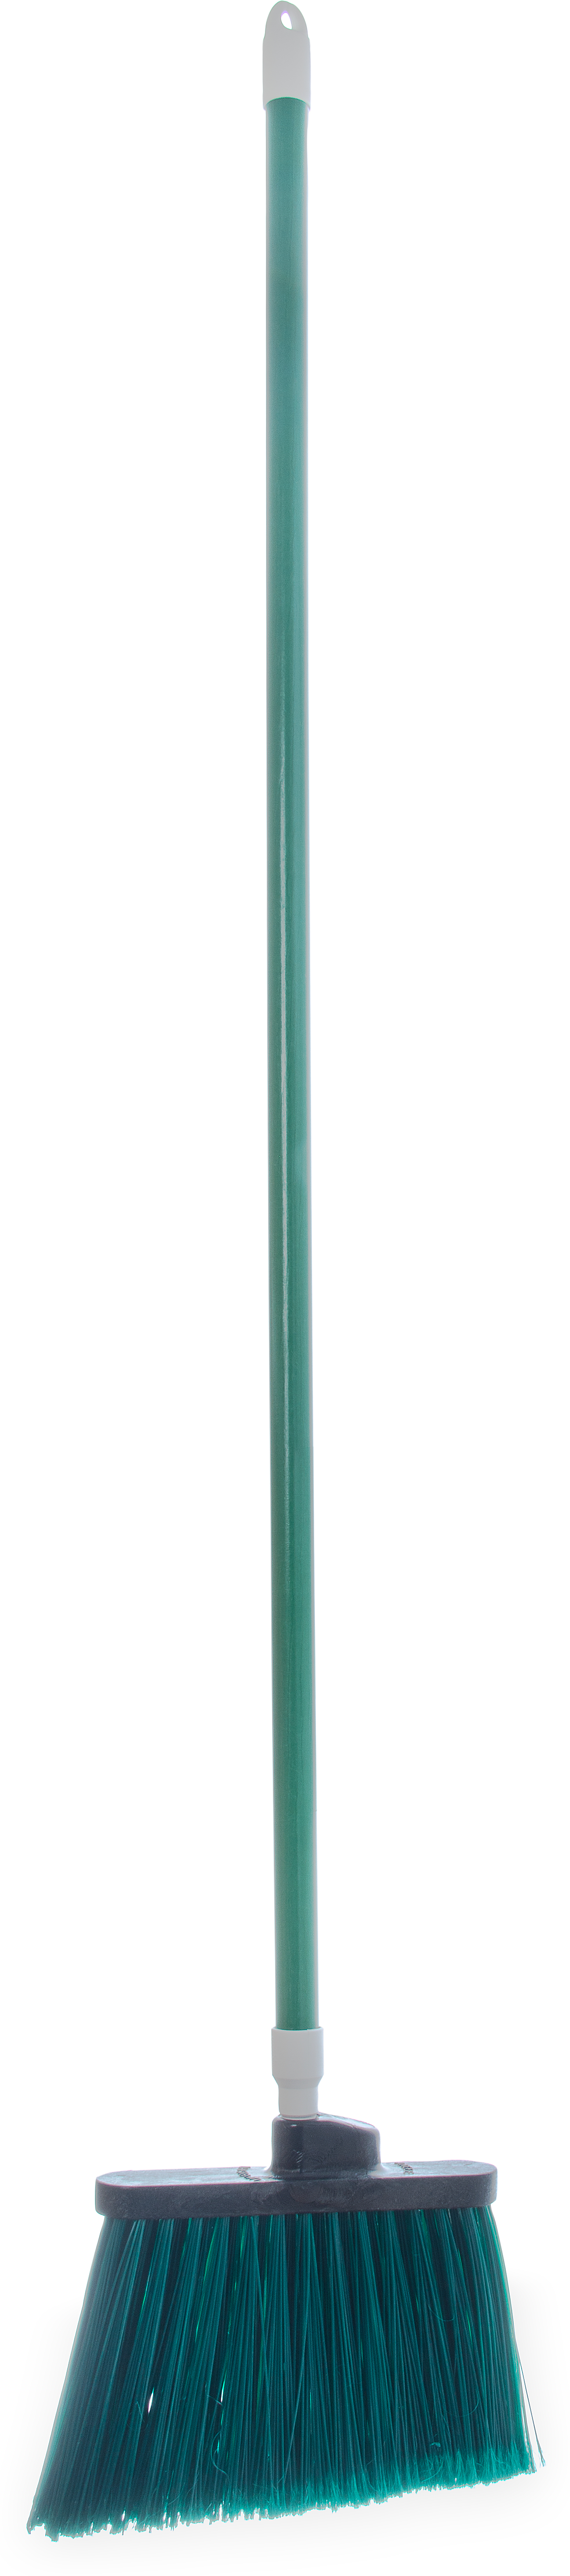 Duo-Sweep Angle Broom Flagged Bristle 56 Long - Green